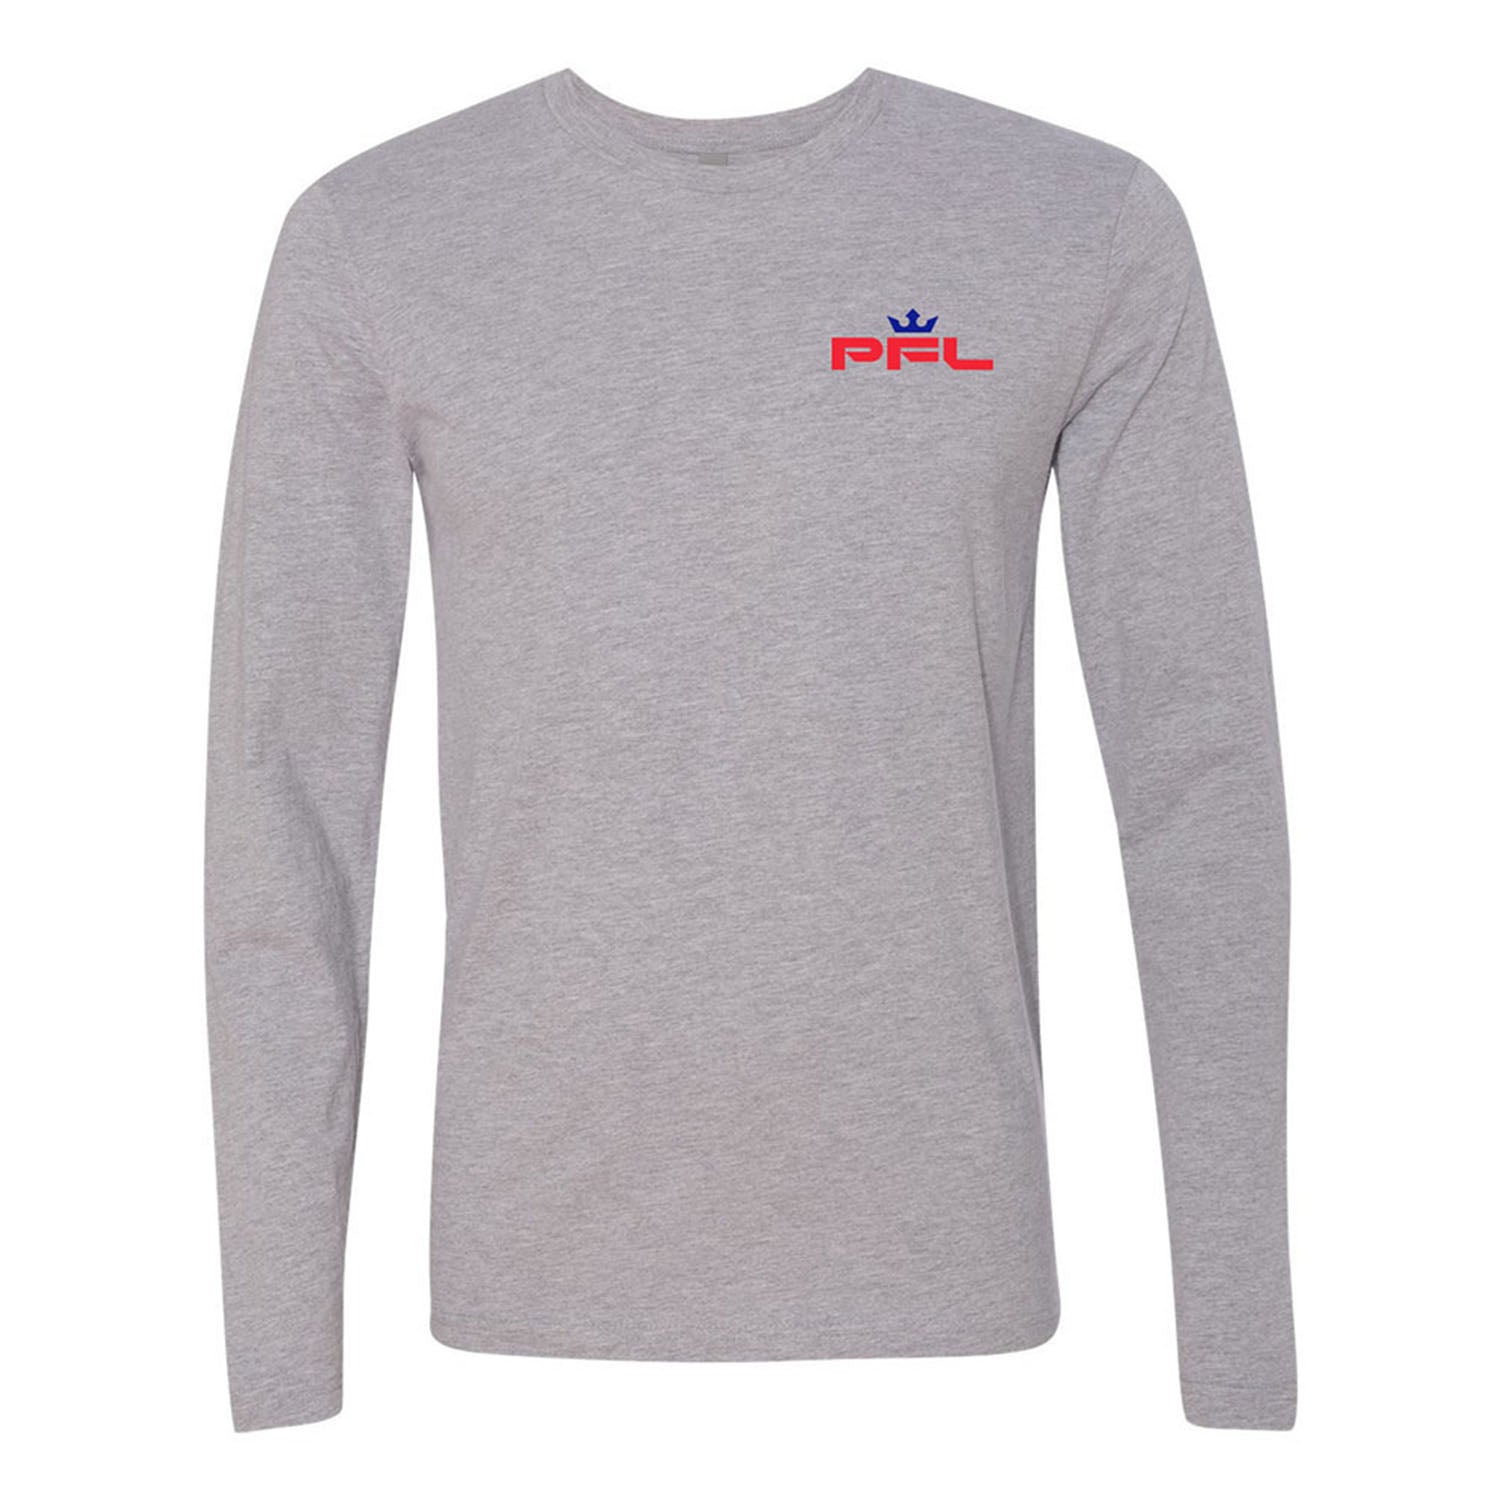 PFL Logo Long-Sleeve T-Shirt in Grey - Back View